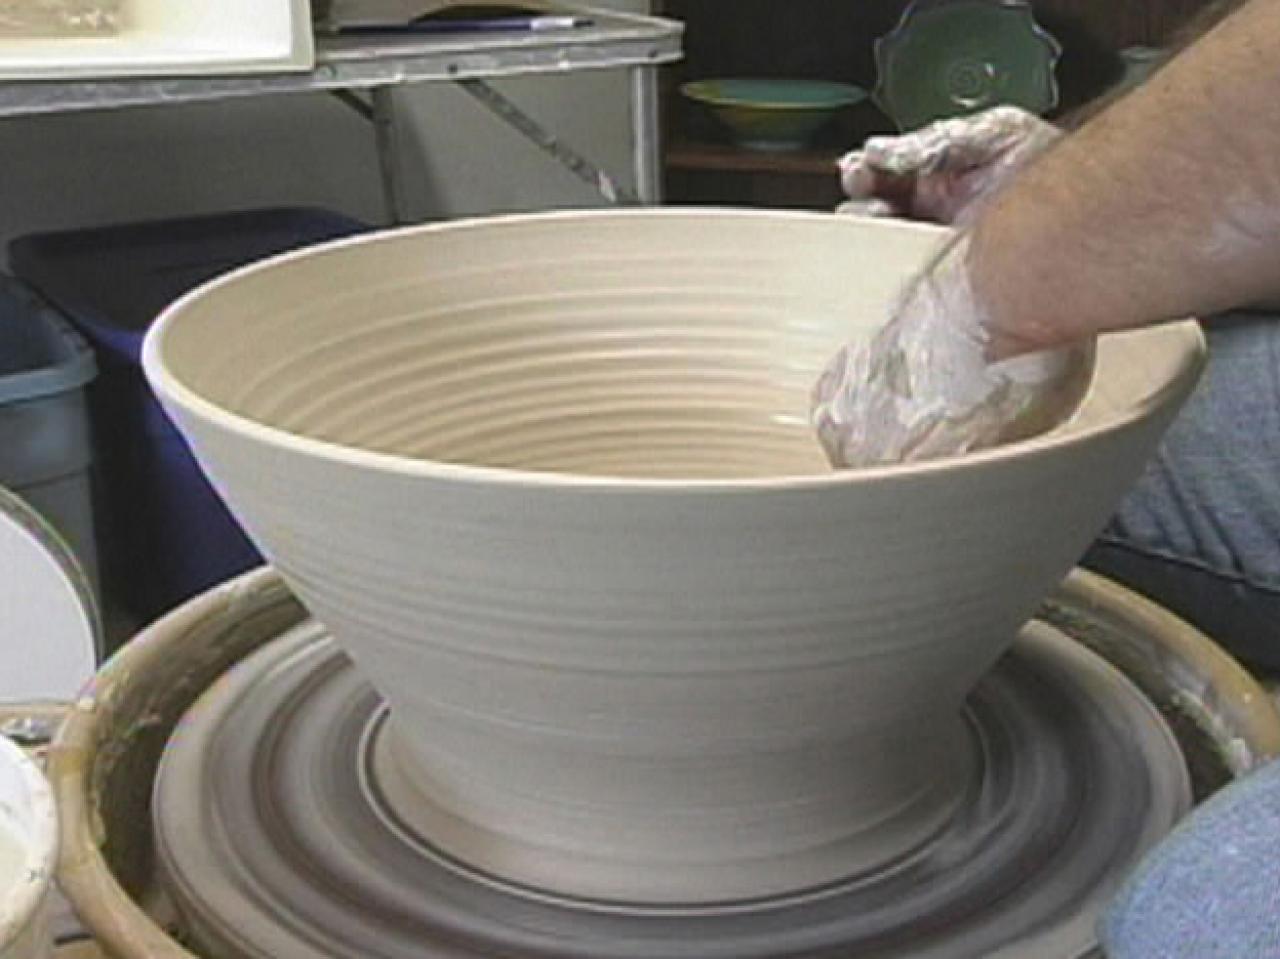 Handmade sinkMoroccan pottery sink pottery cacker ceramic sink.